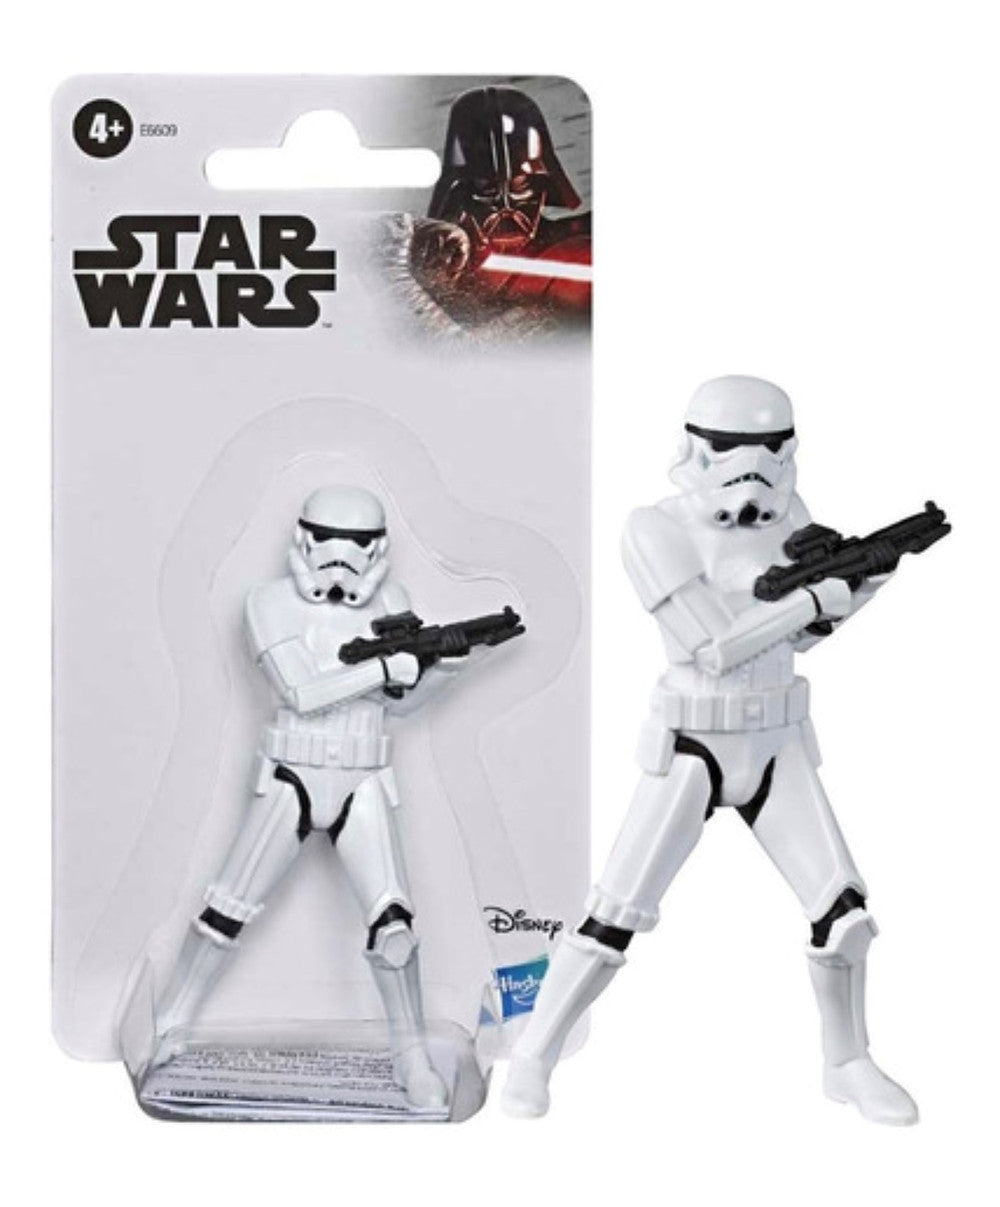 Star Wars 4" Basic Action Figure Stormtrooper